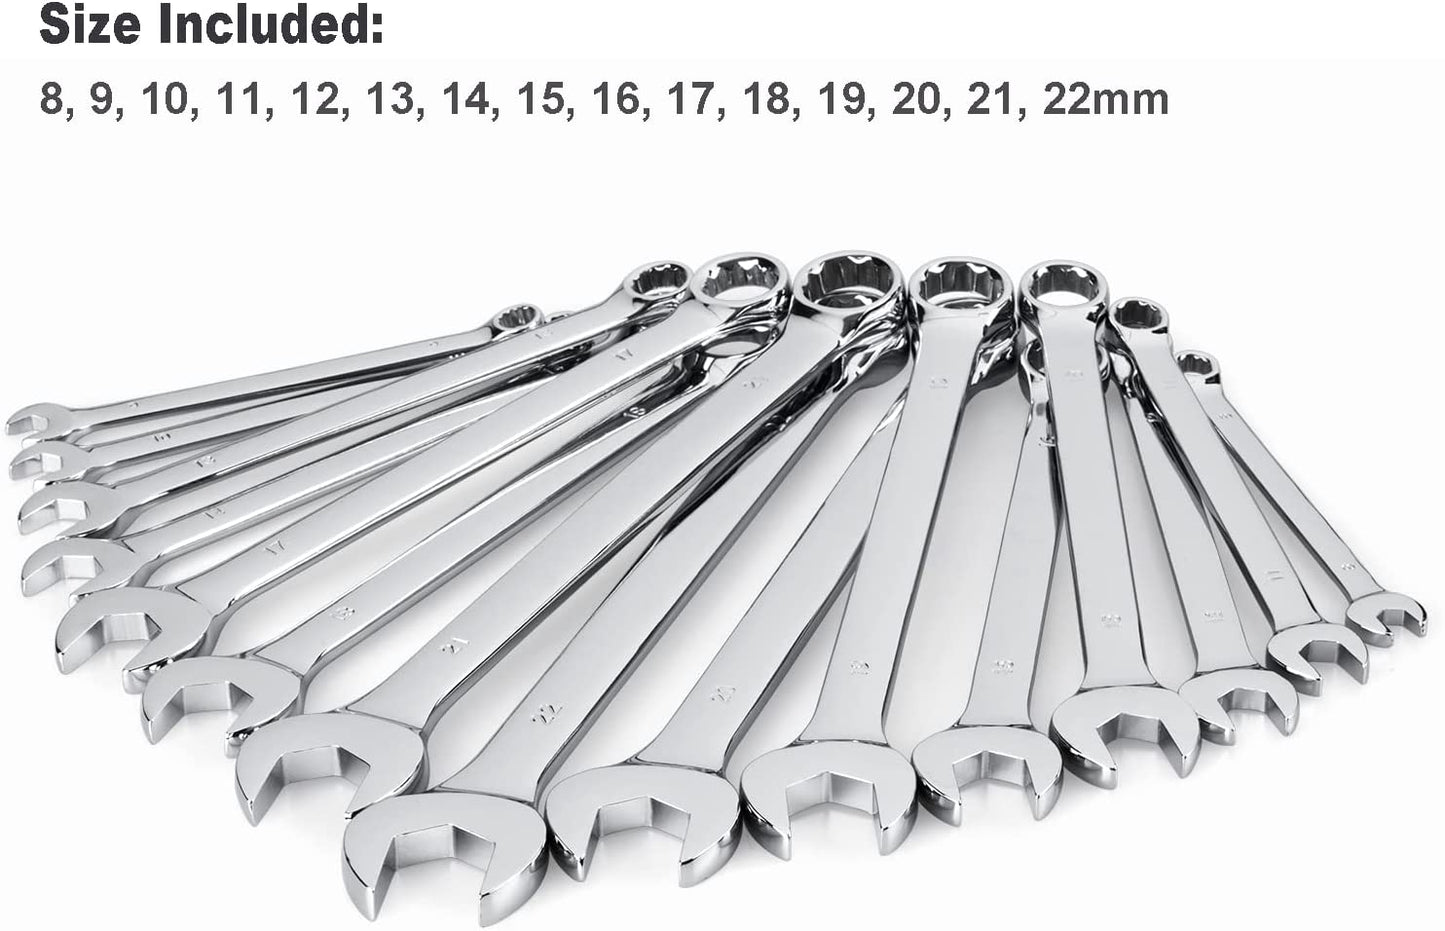 15-Piece Chrome Vanadium Steel Combination Wrench Set Metric Sizes 8-22mm with Storage Rack